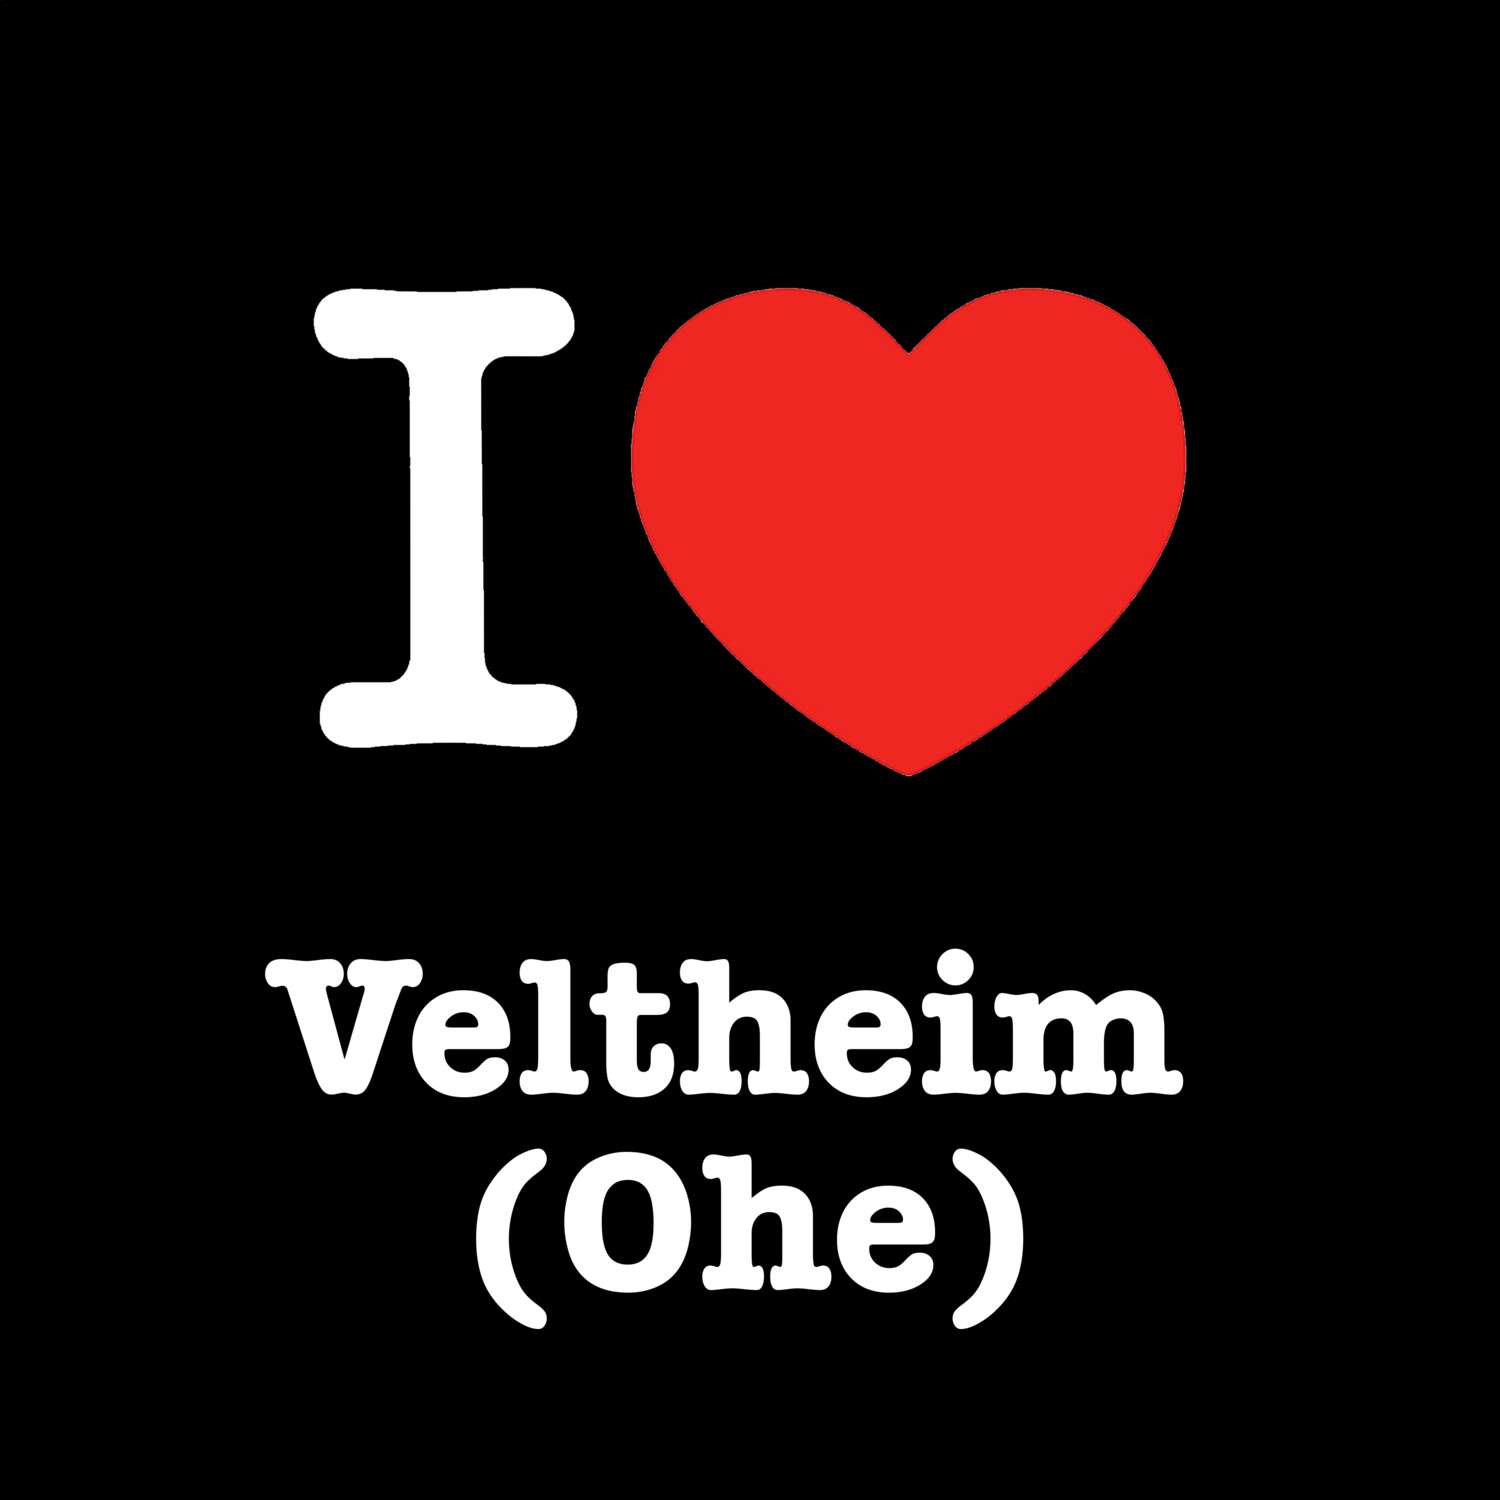 Veltheim (Ohe) T-Shirt »I love«